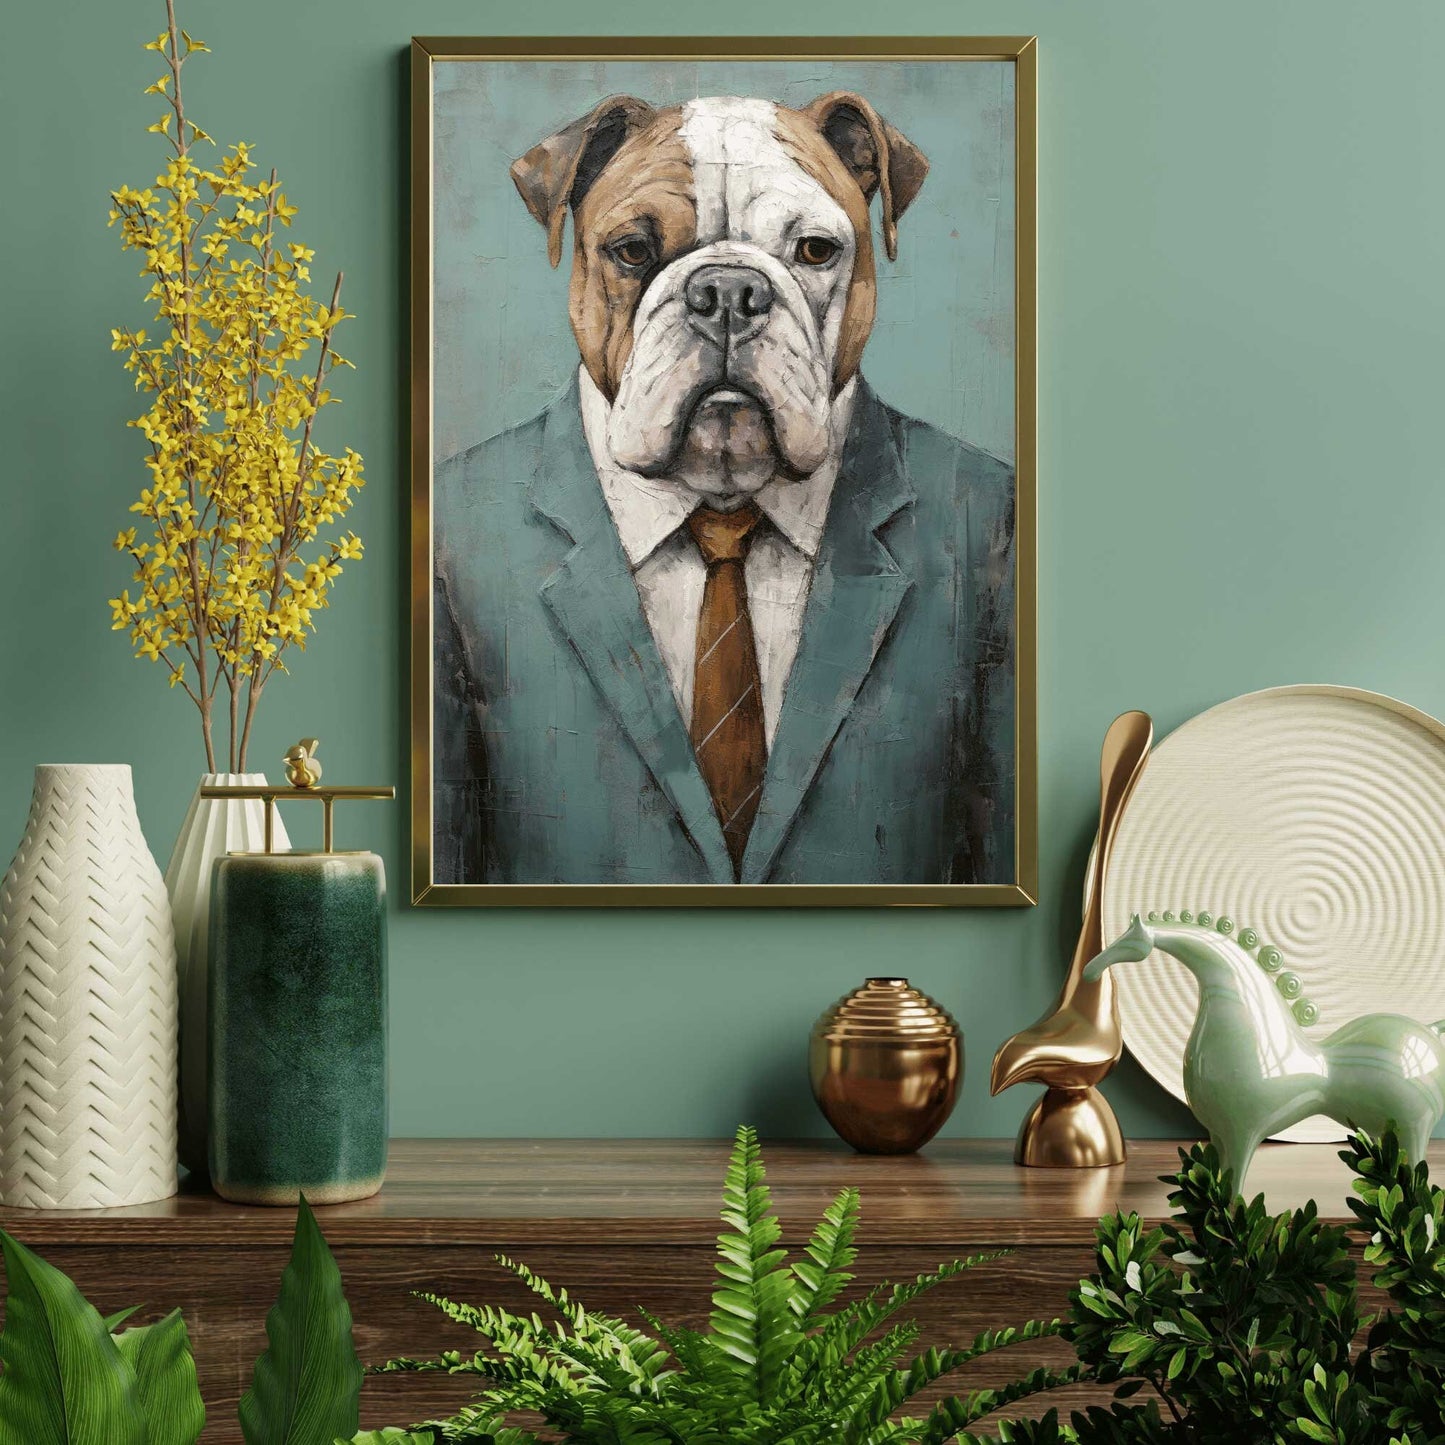 English Bulldog Art, Vintage Dog Print, Dog with Clothes, Bulldog Portrait, Rustic Dog Decor, DIGITAL Printable Funny Dog Wall Art